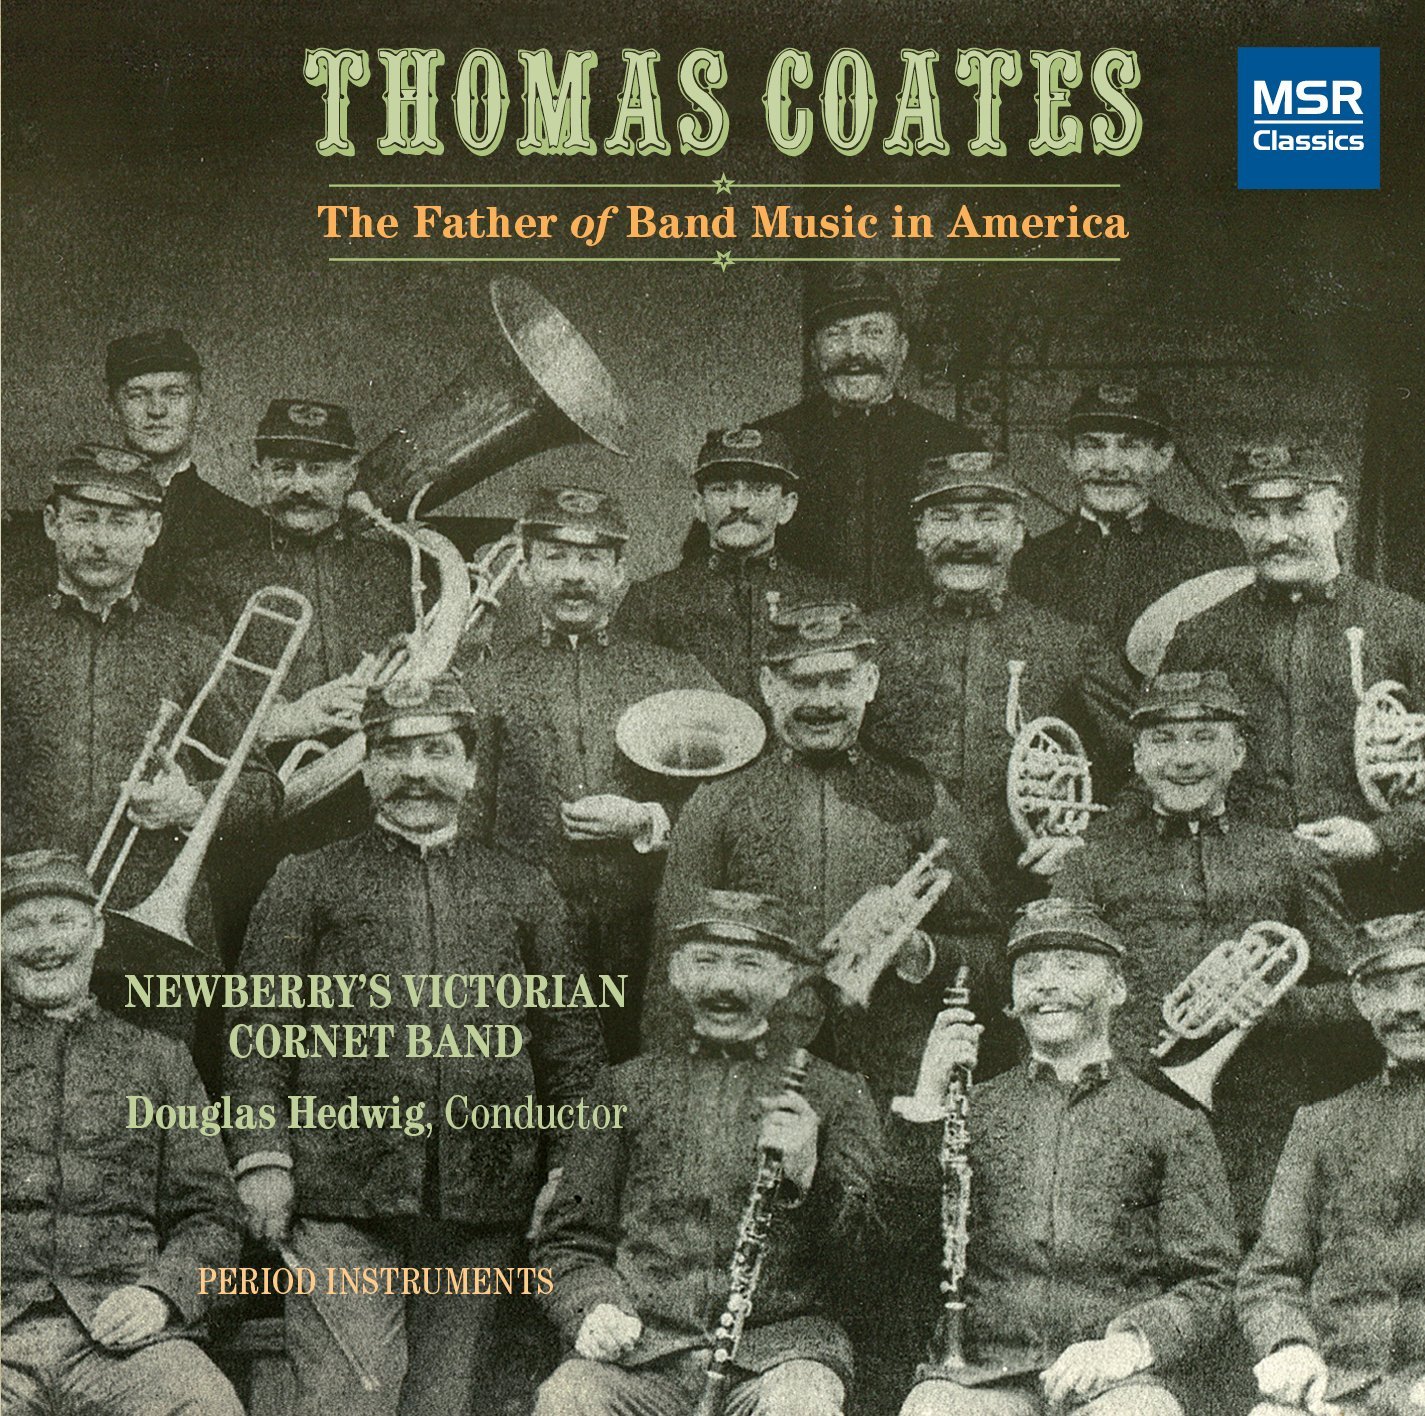 Thomas Coates by Newberry’s Victorian Cornet Band